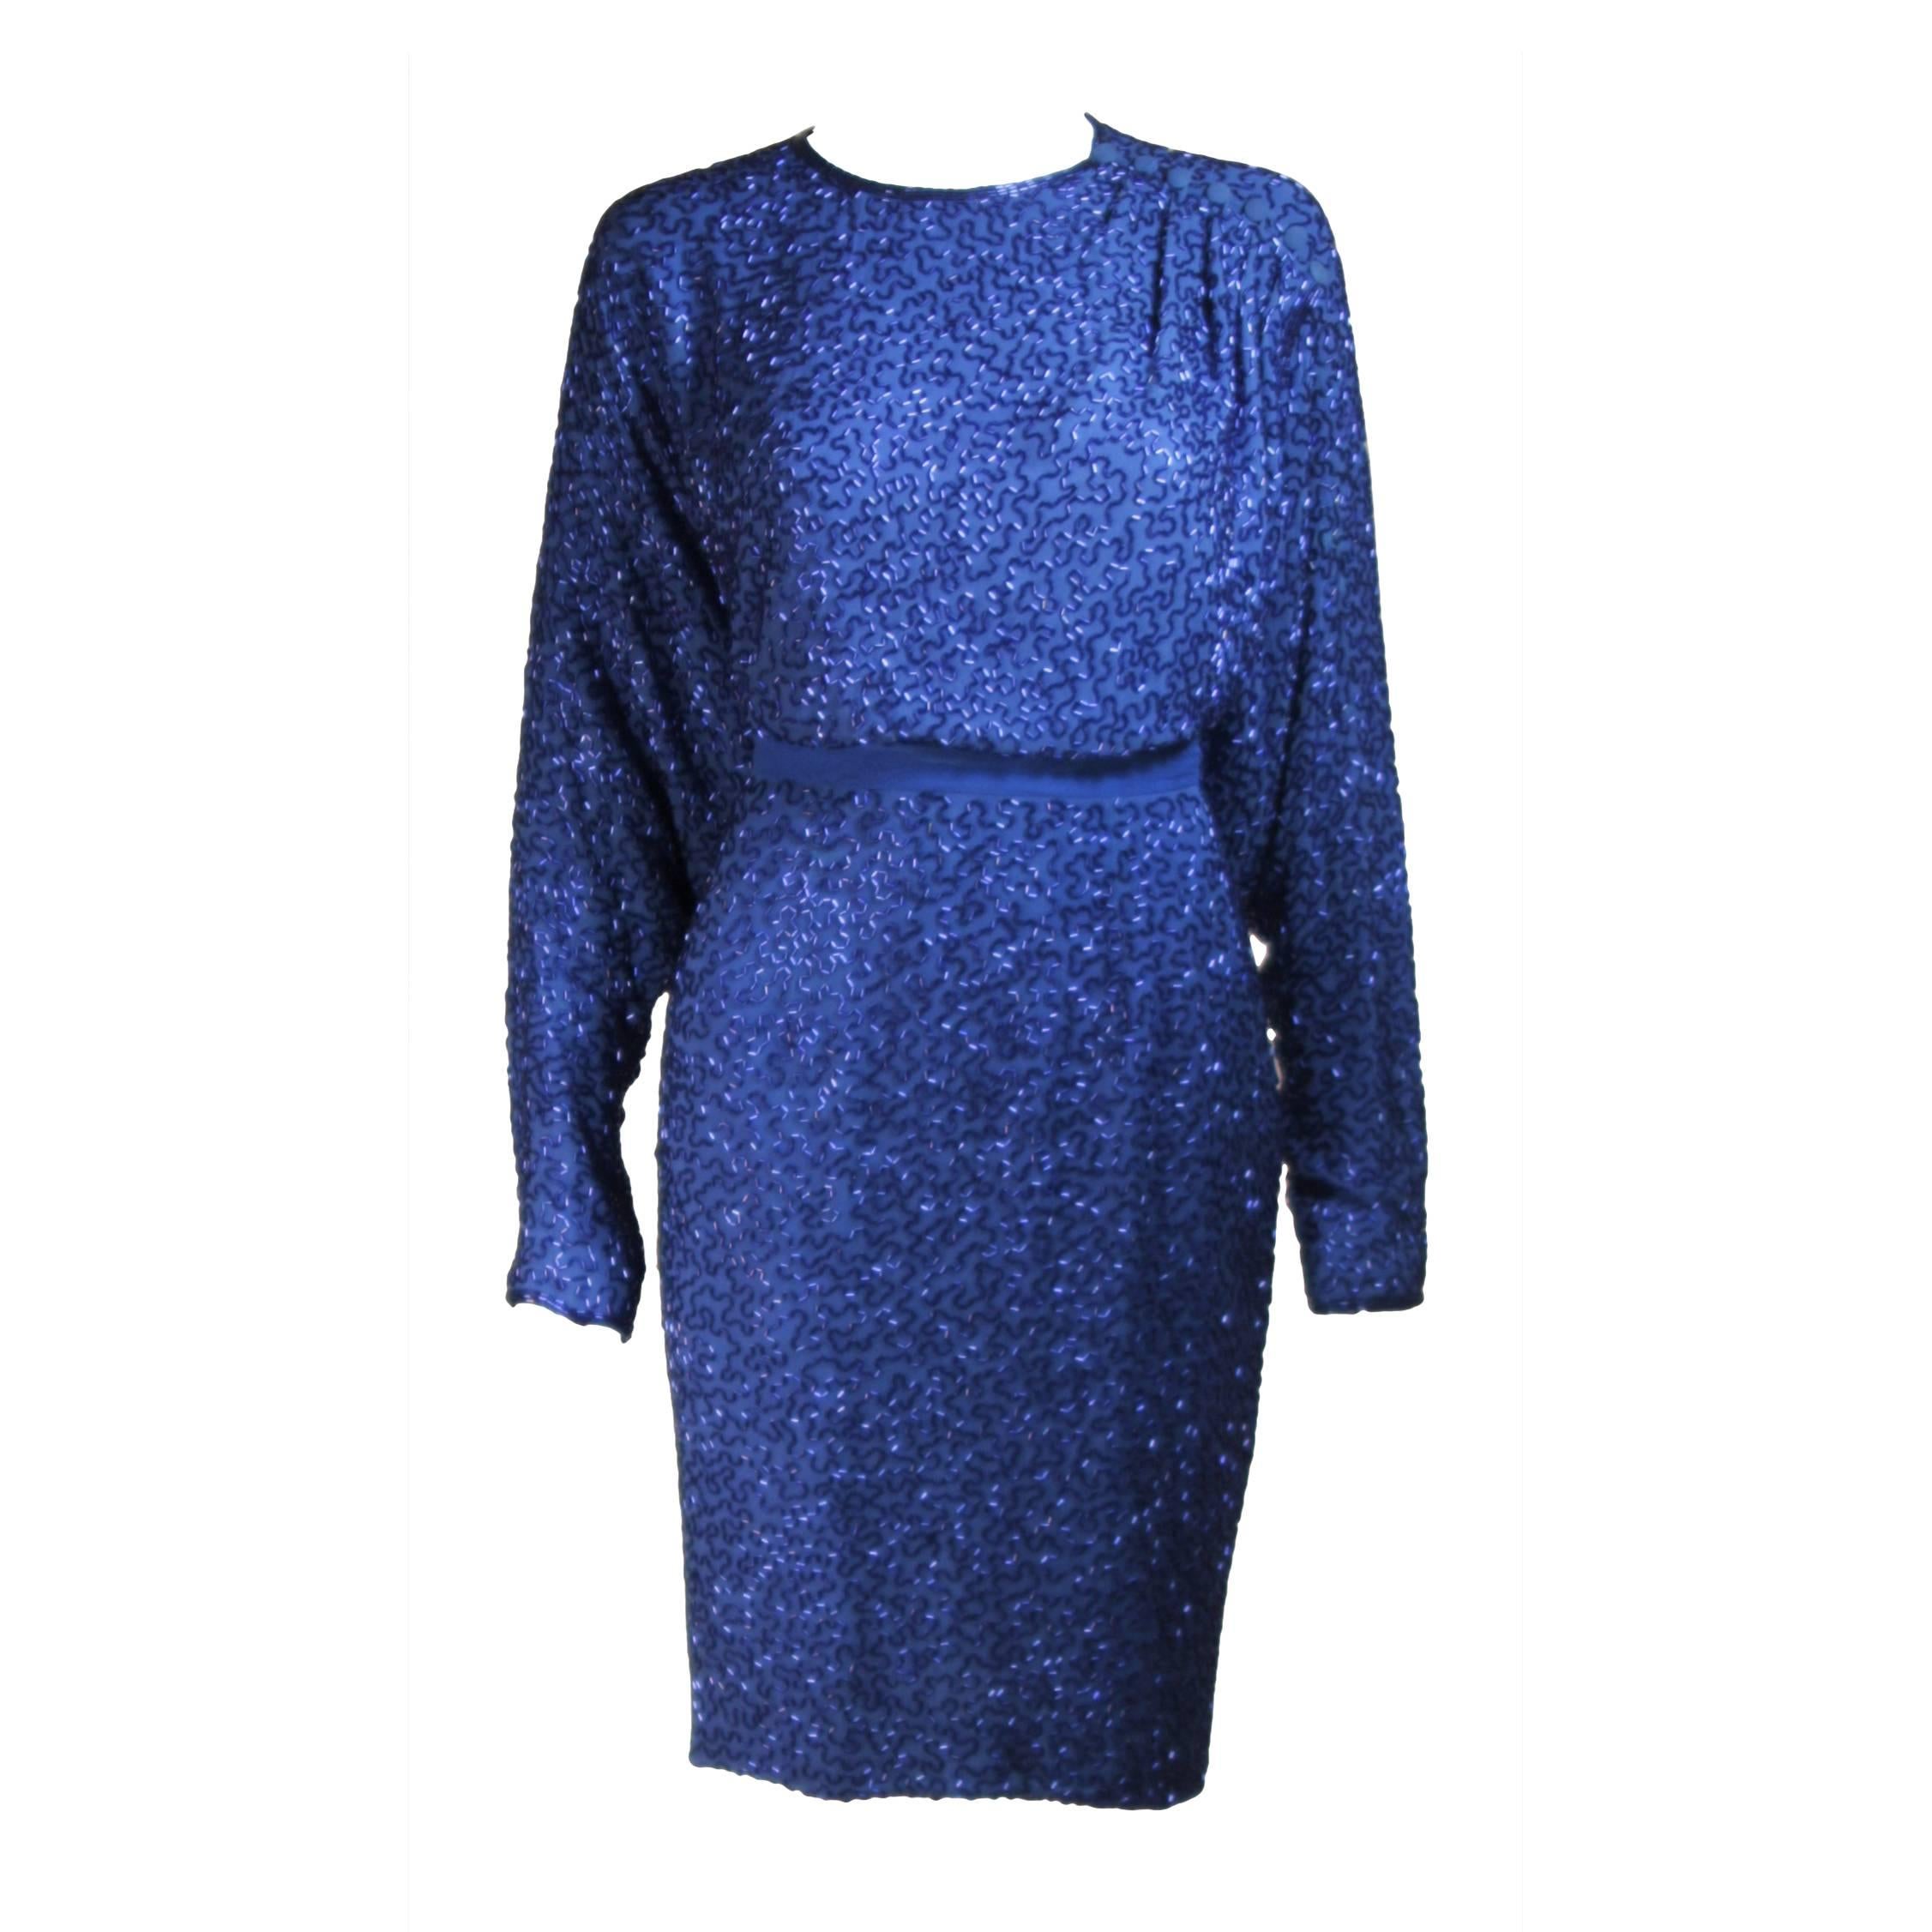 STEPHEN YEARIK Royal Blue Silk Beaded Skirt Ensemble Size 4-6 